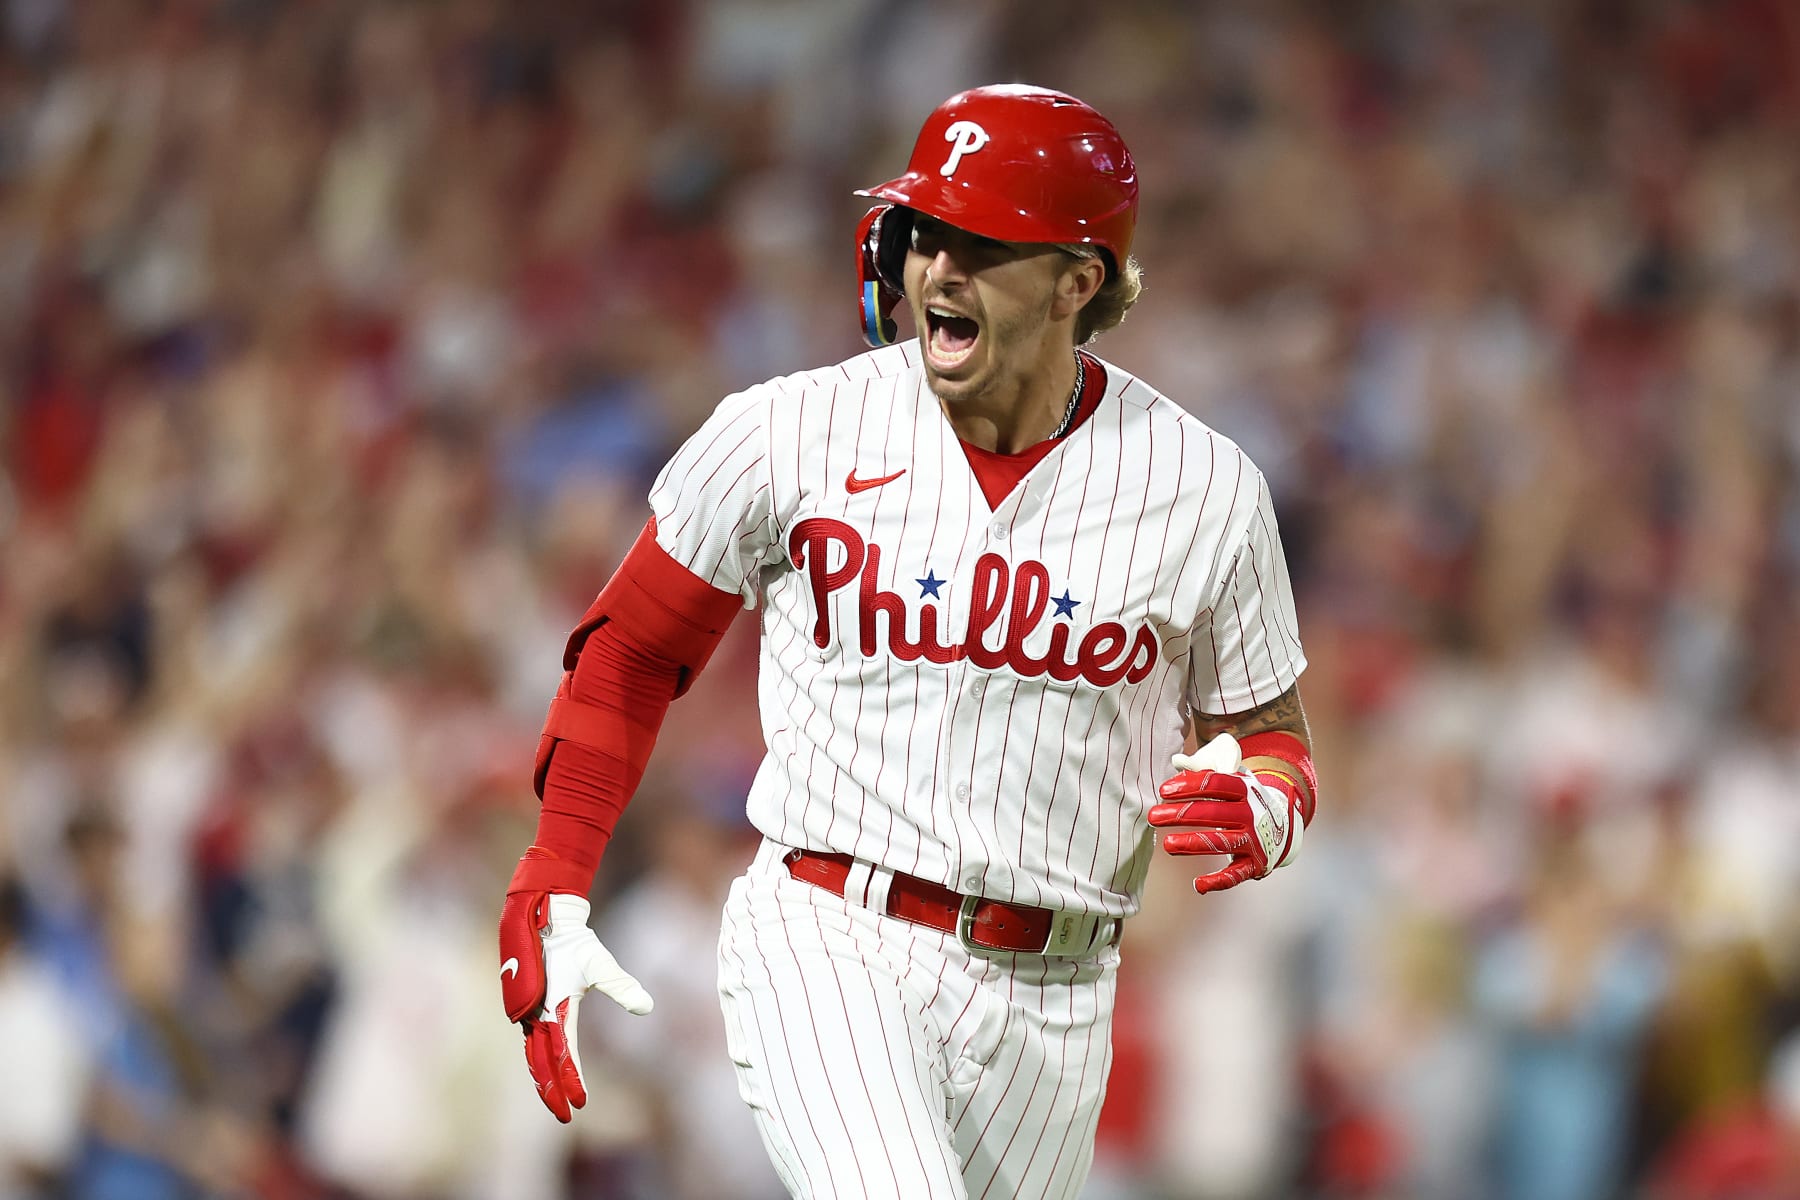 Philadelphia Phillies' Bryson Stott plays during a baseball game